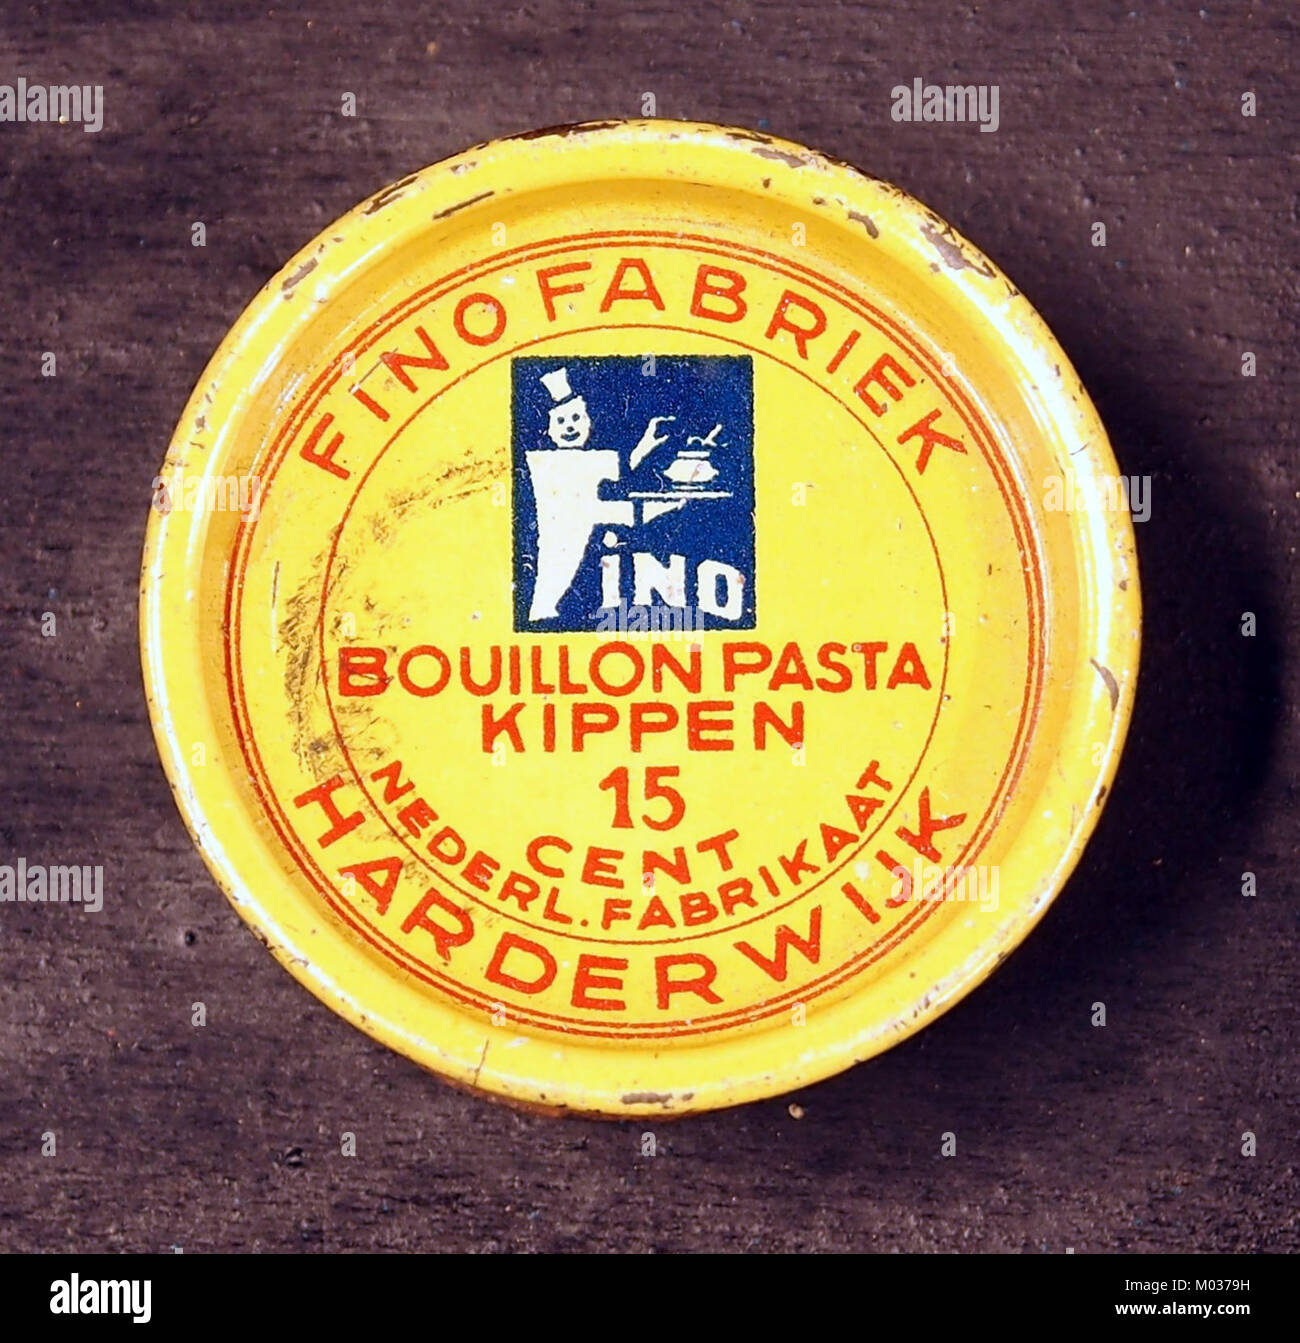 Bouillon pasta kippen, Fino fabriek Harderwijk Stock Photo